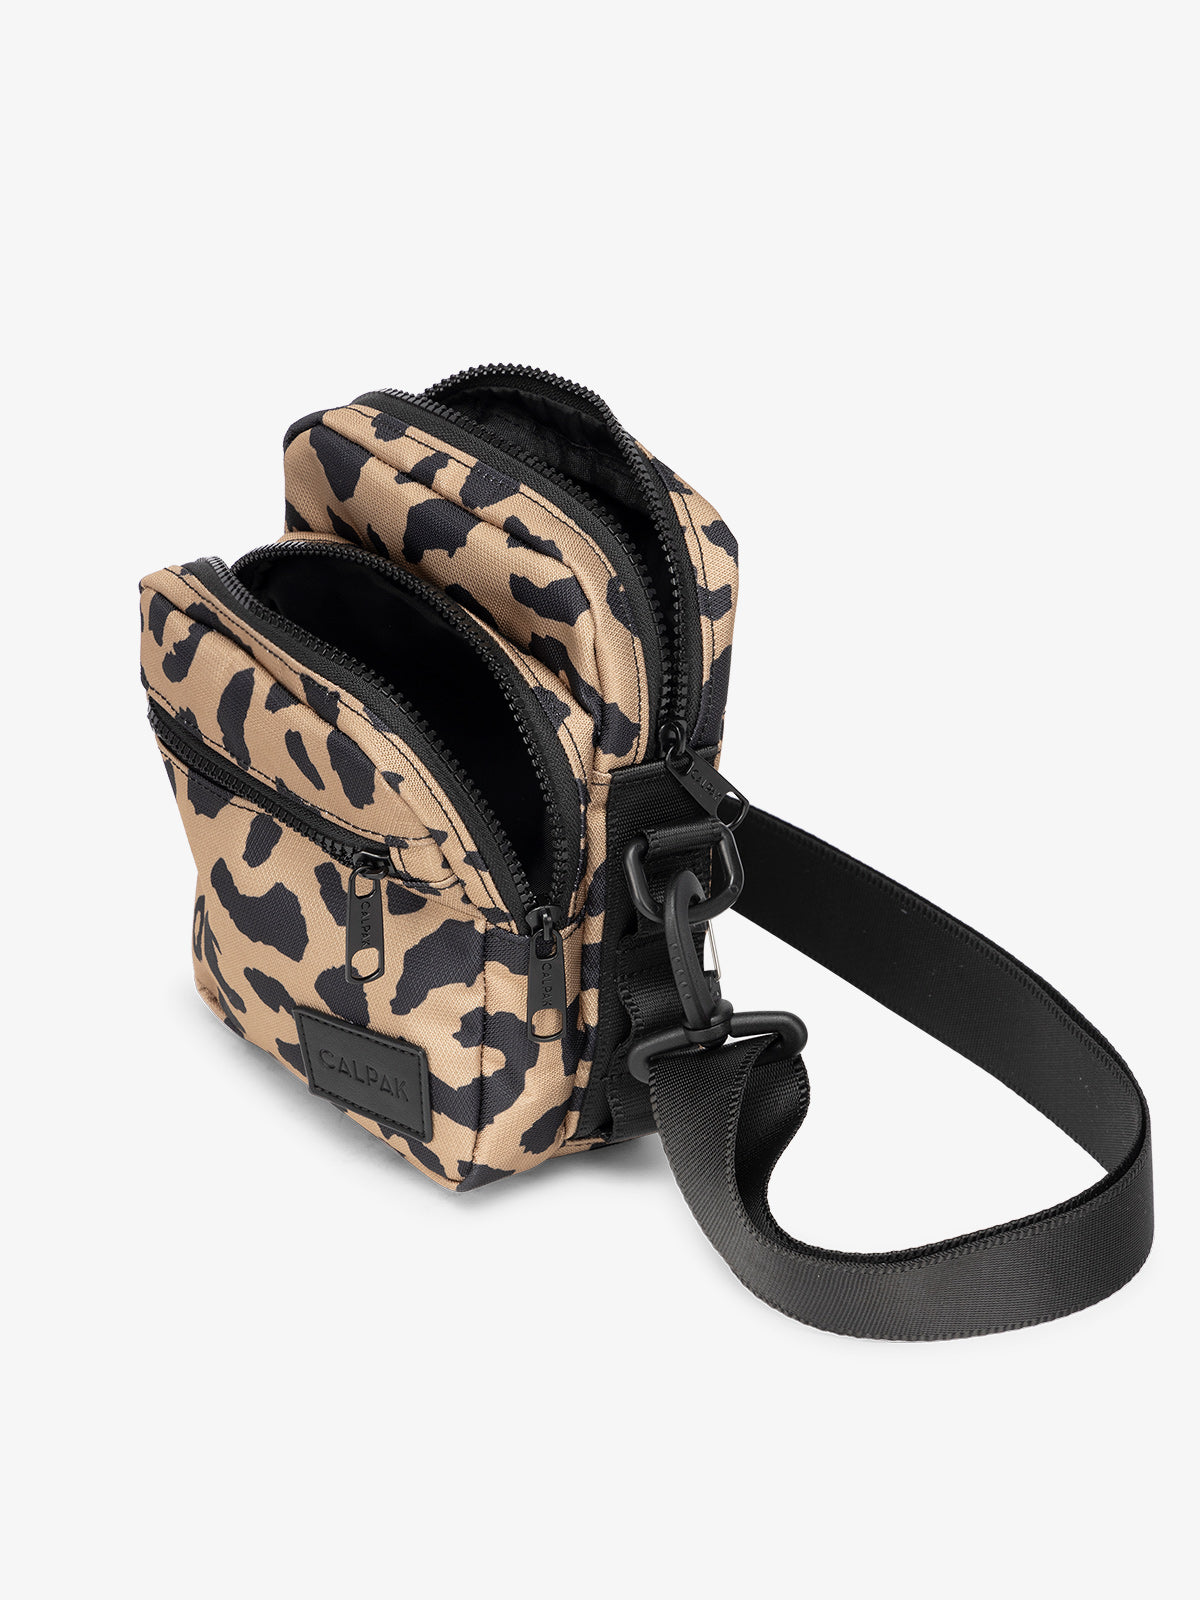 Cheetah CALPAK Stevyn Mini Crossbody Bag with adjustable shoulder strap, zippered pockets, and interior zipper pocket